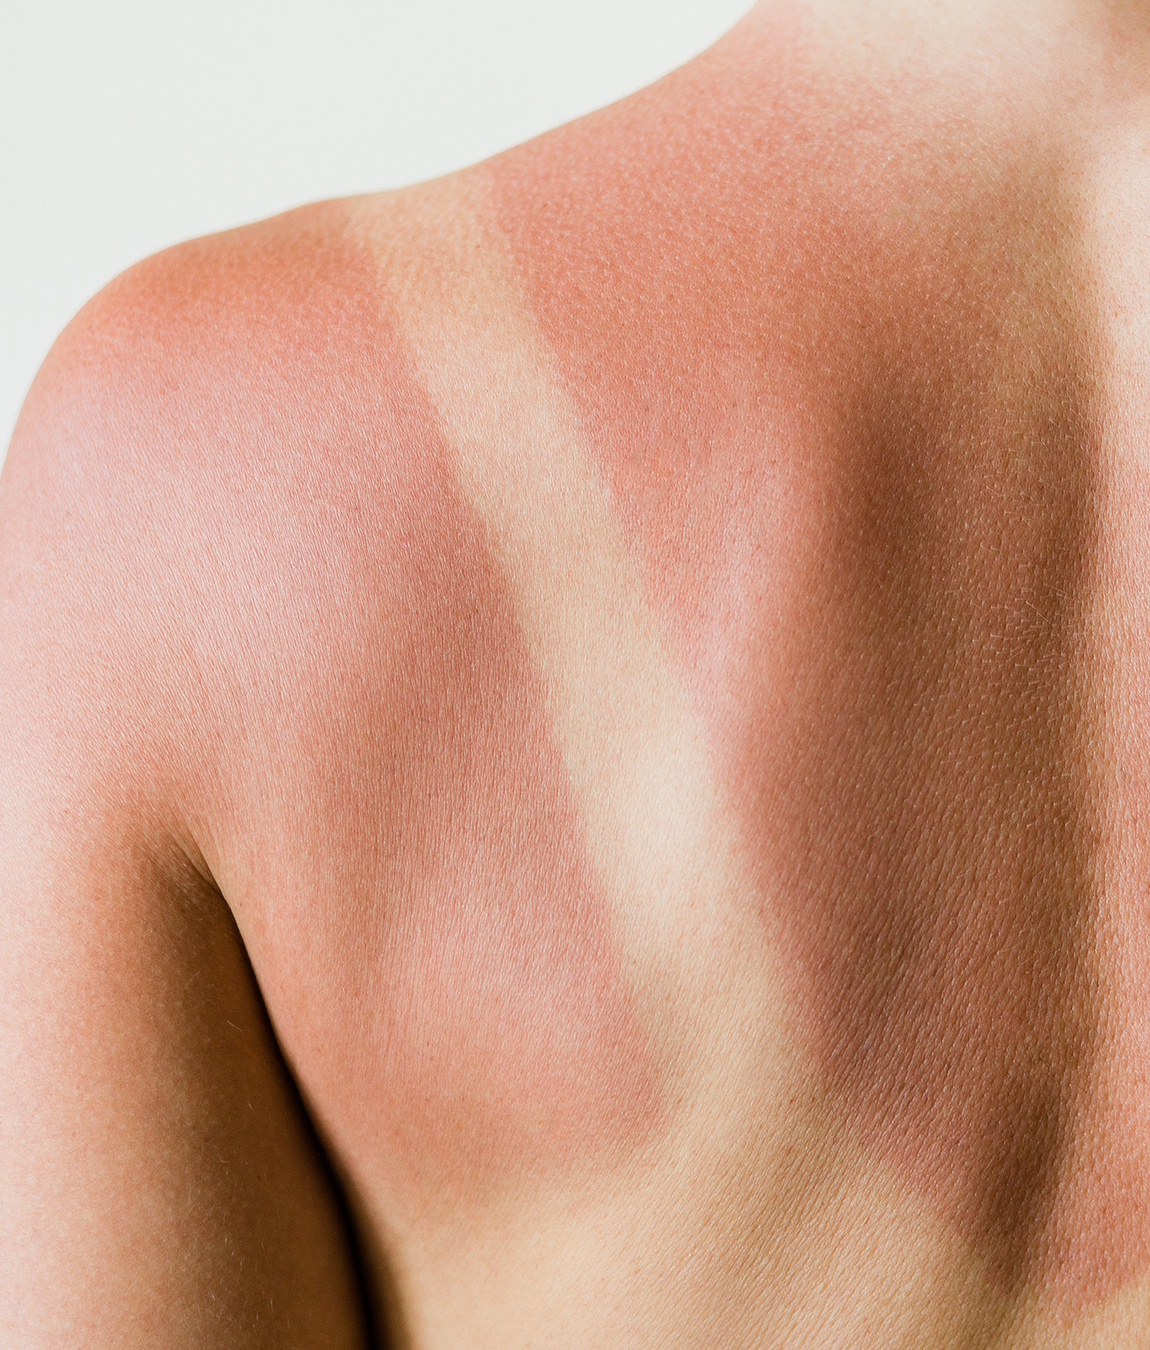 A sunburn on a woman's back